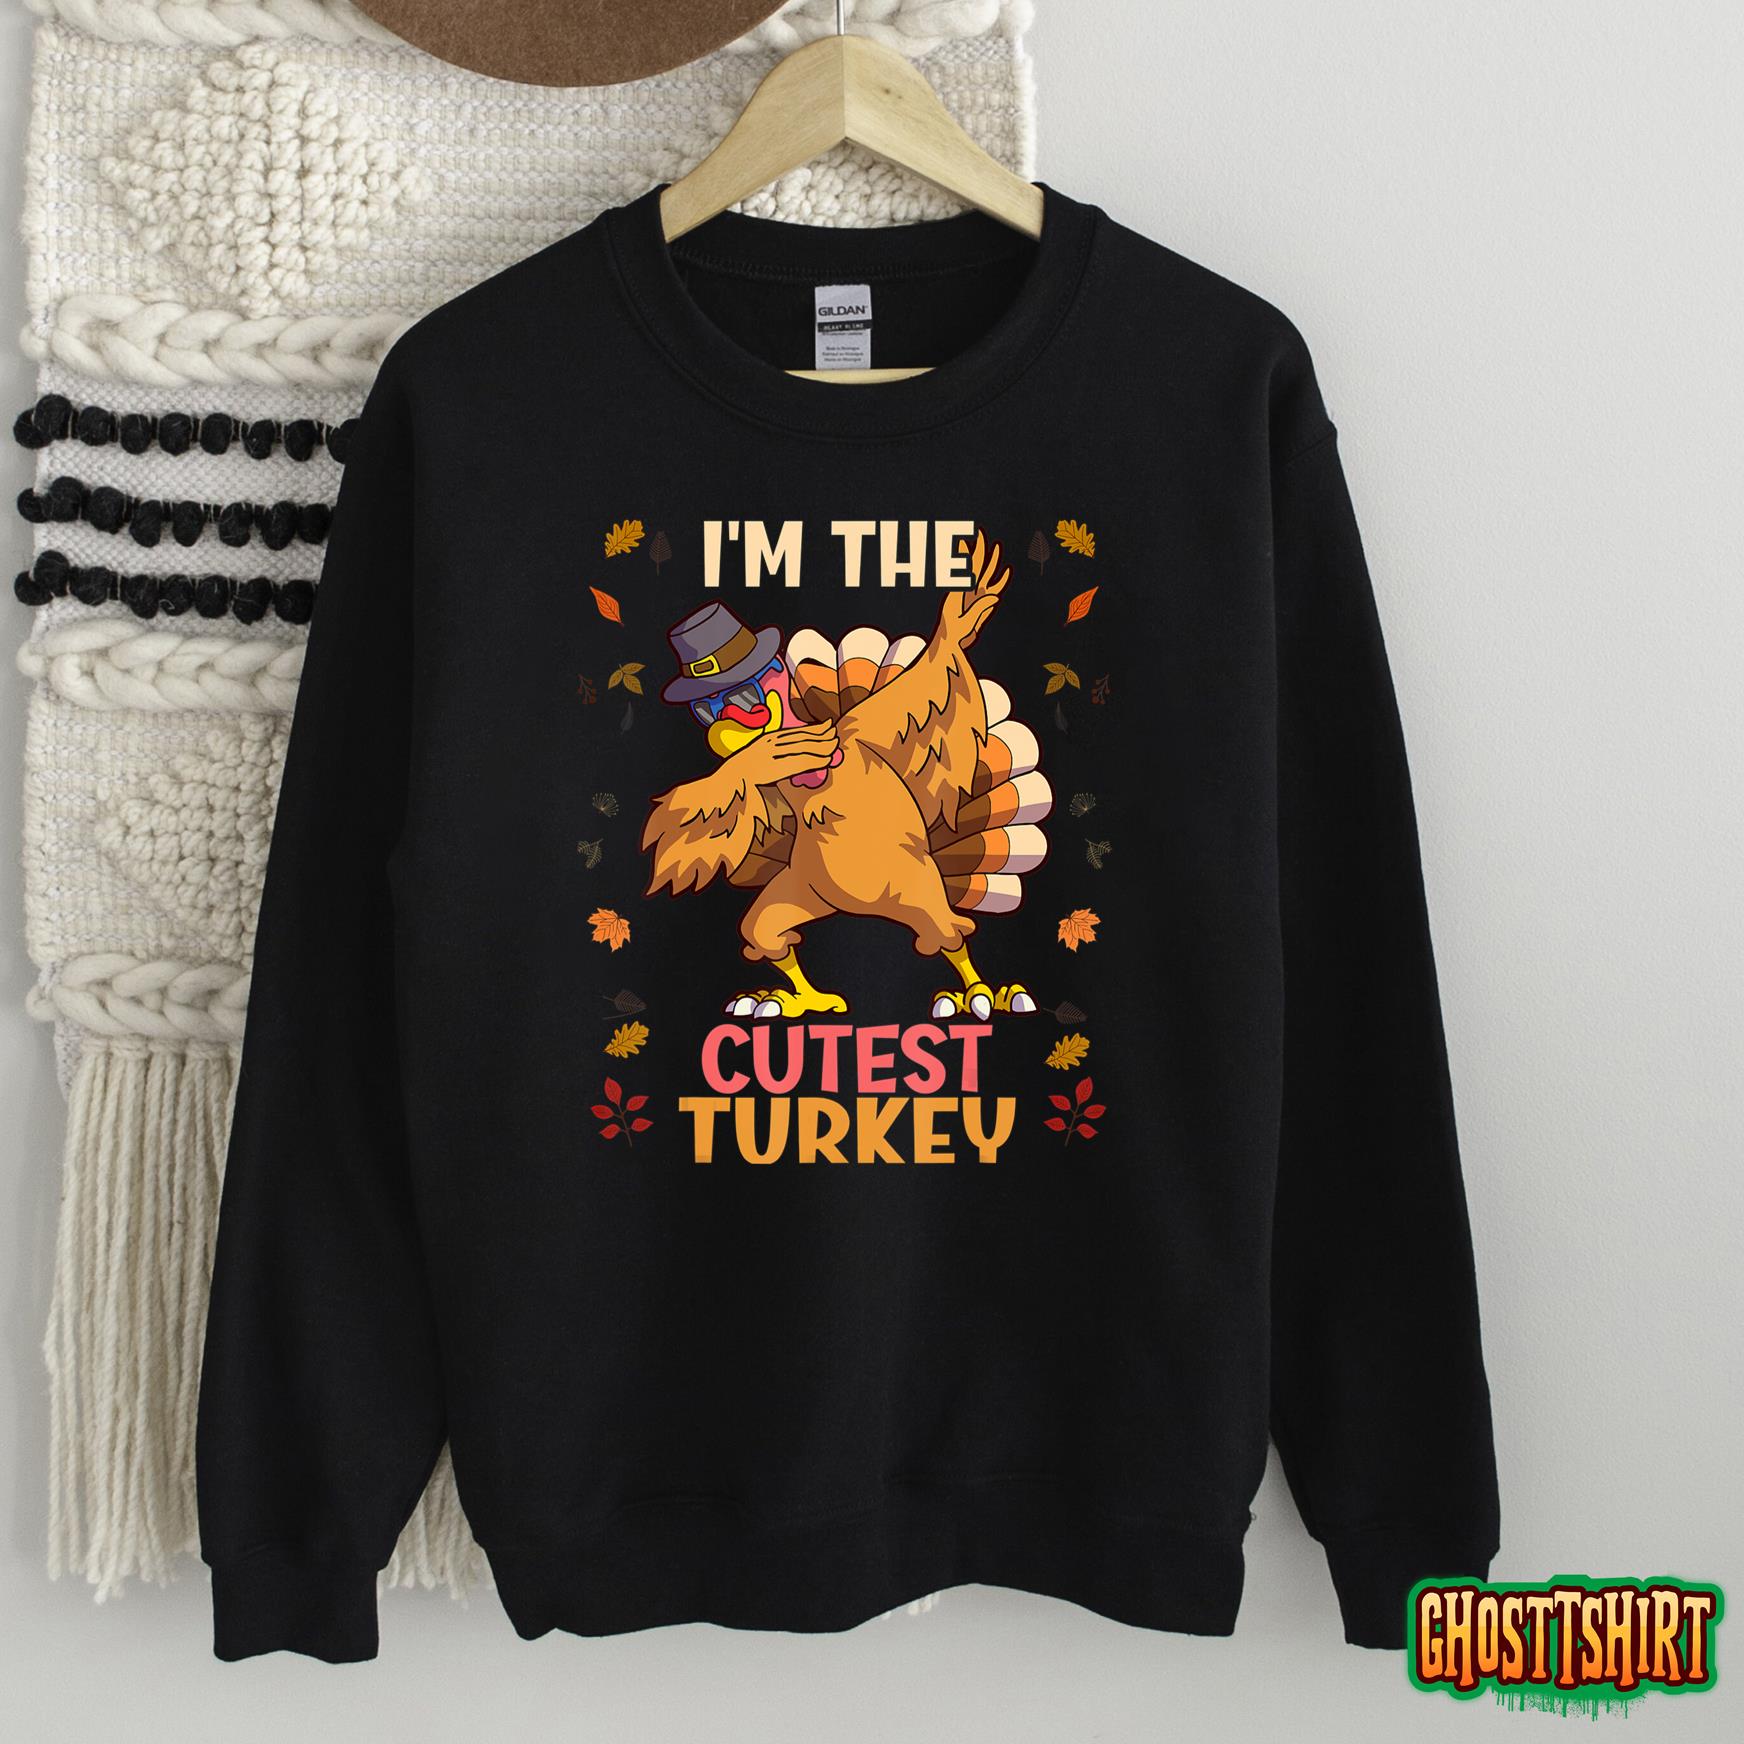 Happy HalloThanksMas Eagle Halloween Thanksgiving Christmas Sweatshirt